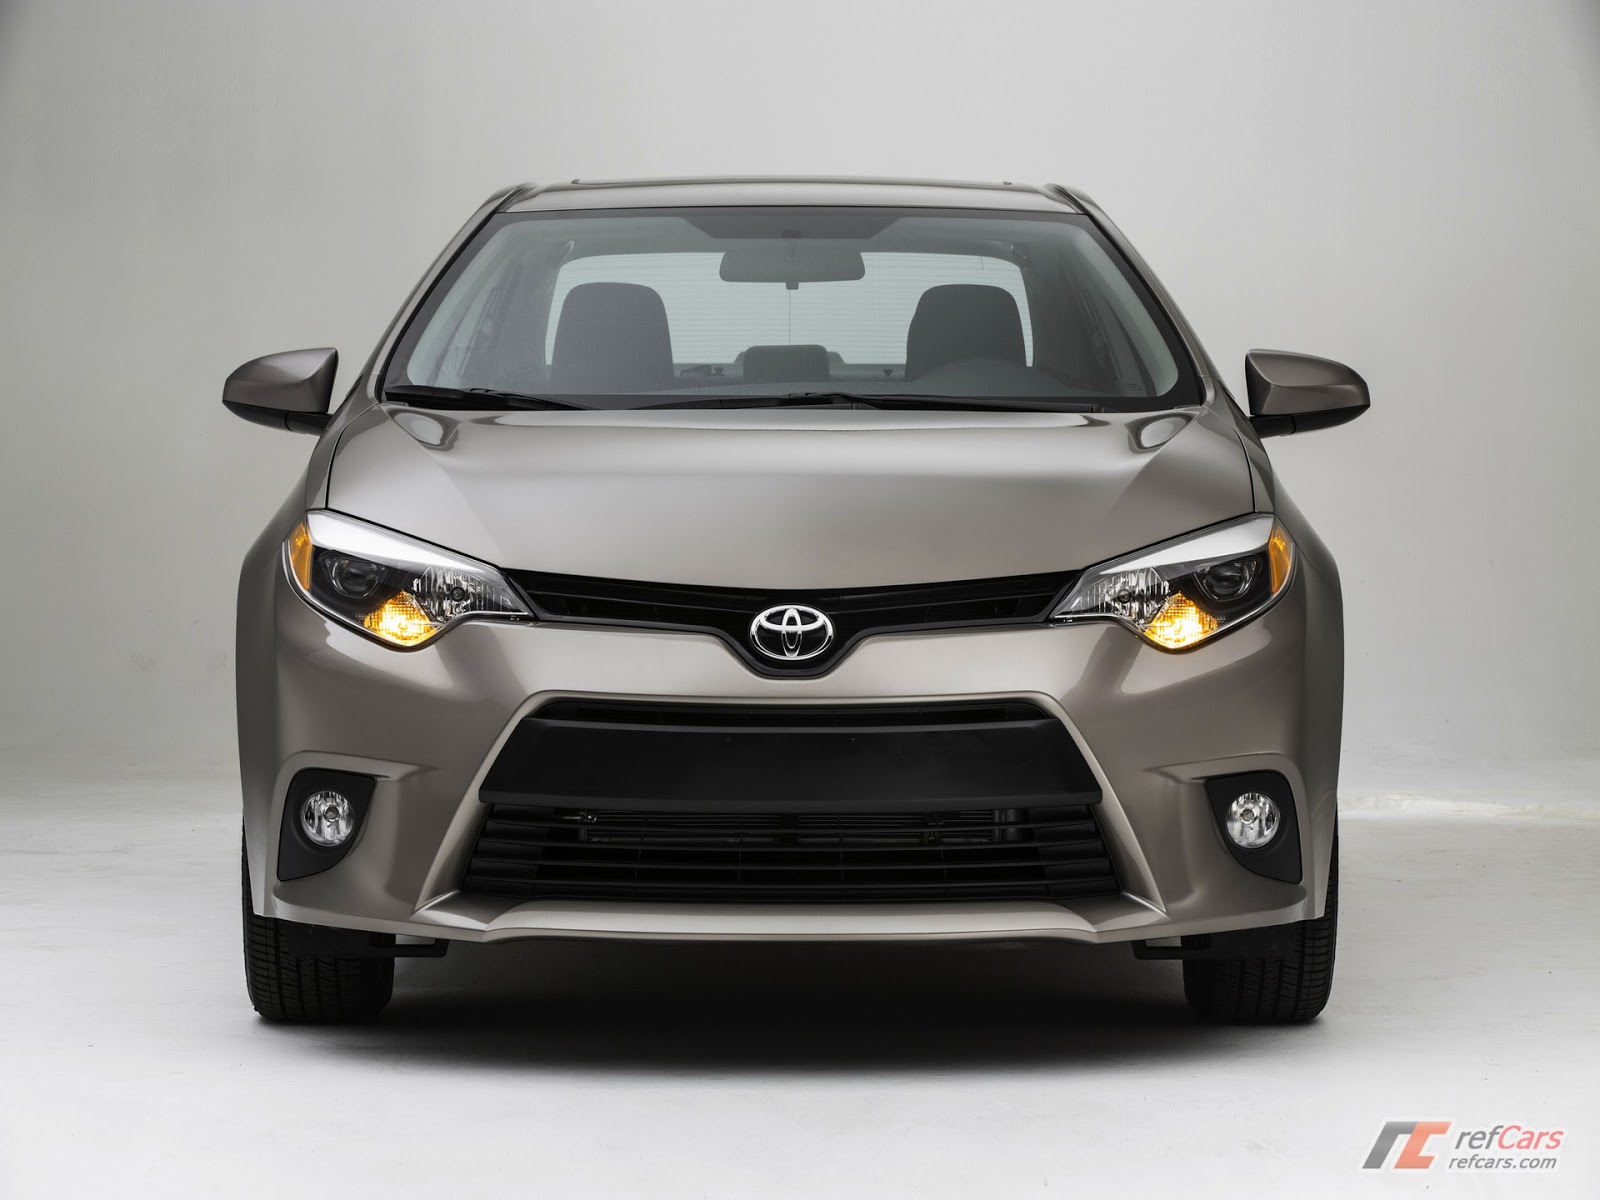 refCars: Toyota Next-Generation 2014 Corolla Sedan